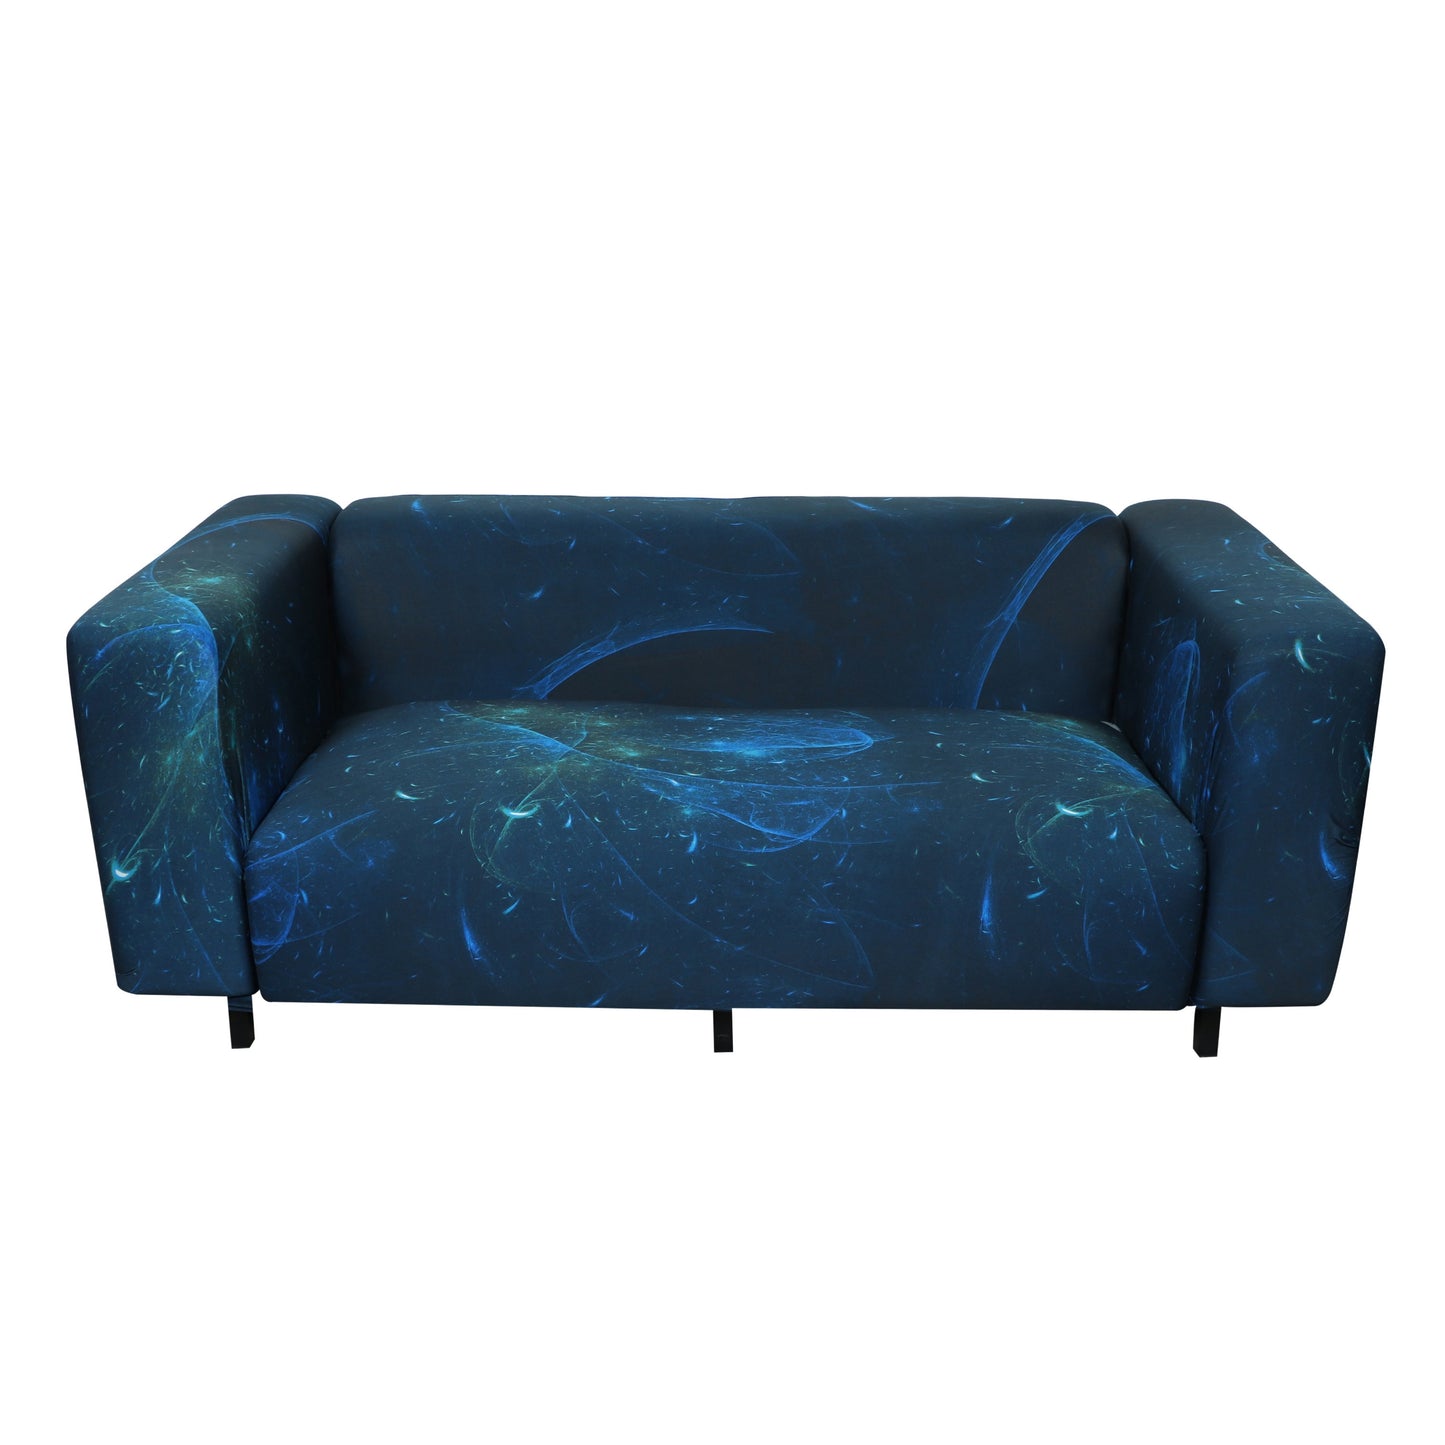 Printed Sofa Cover - Galaxy Blue